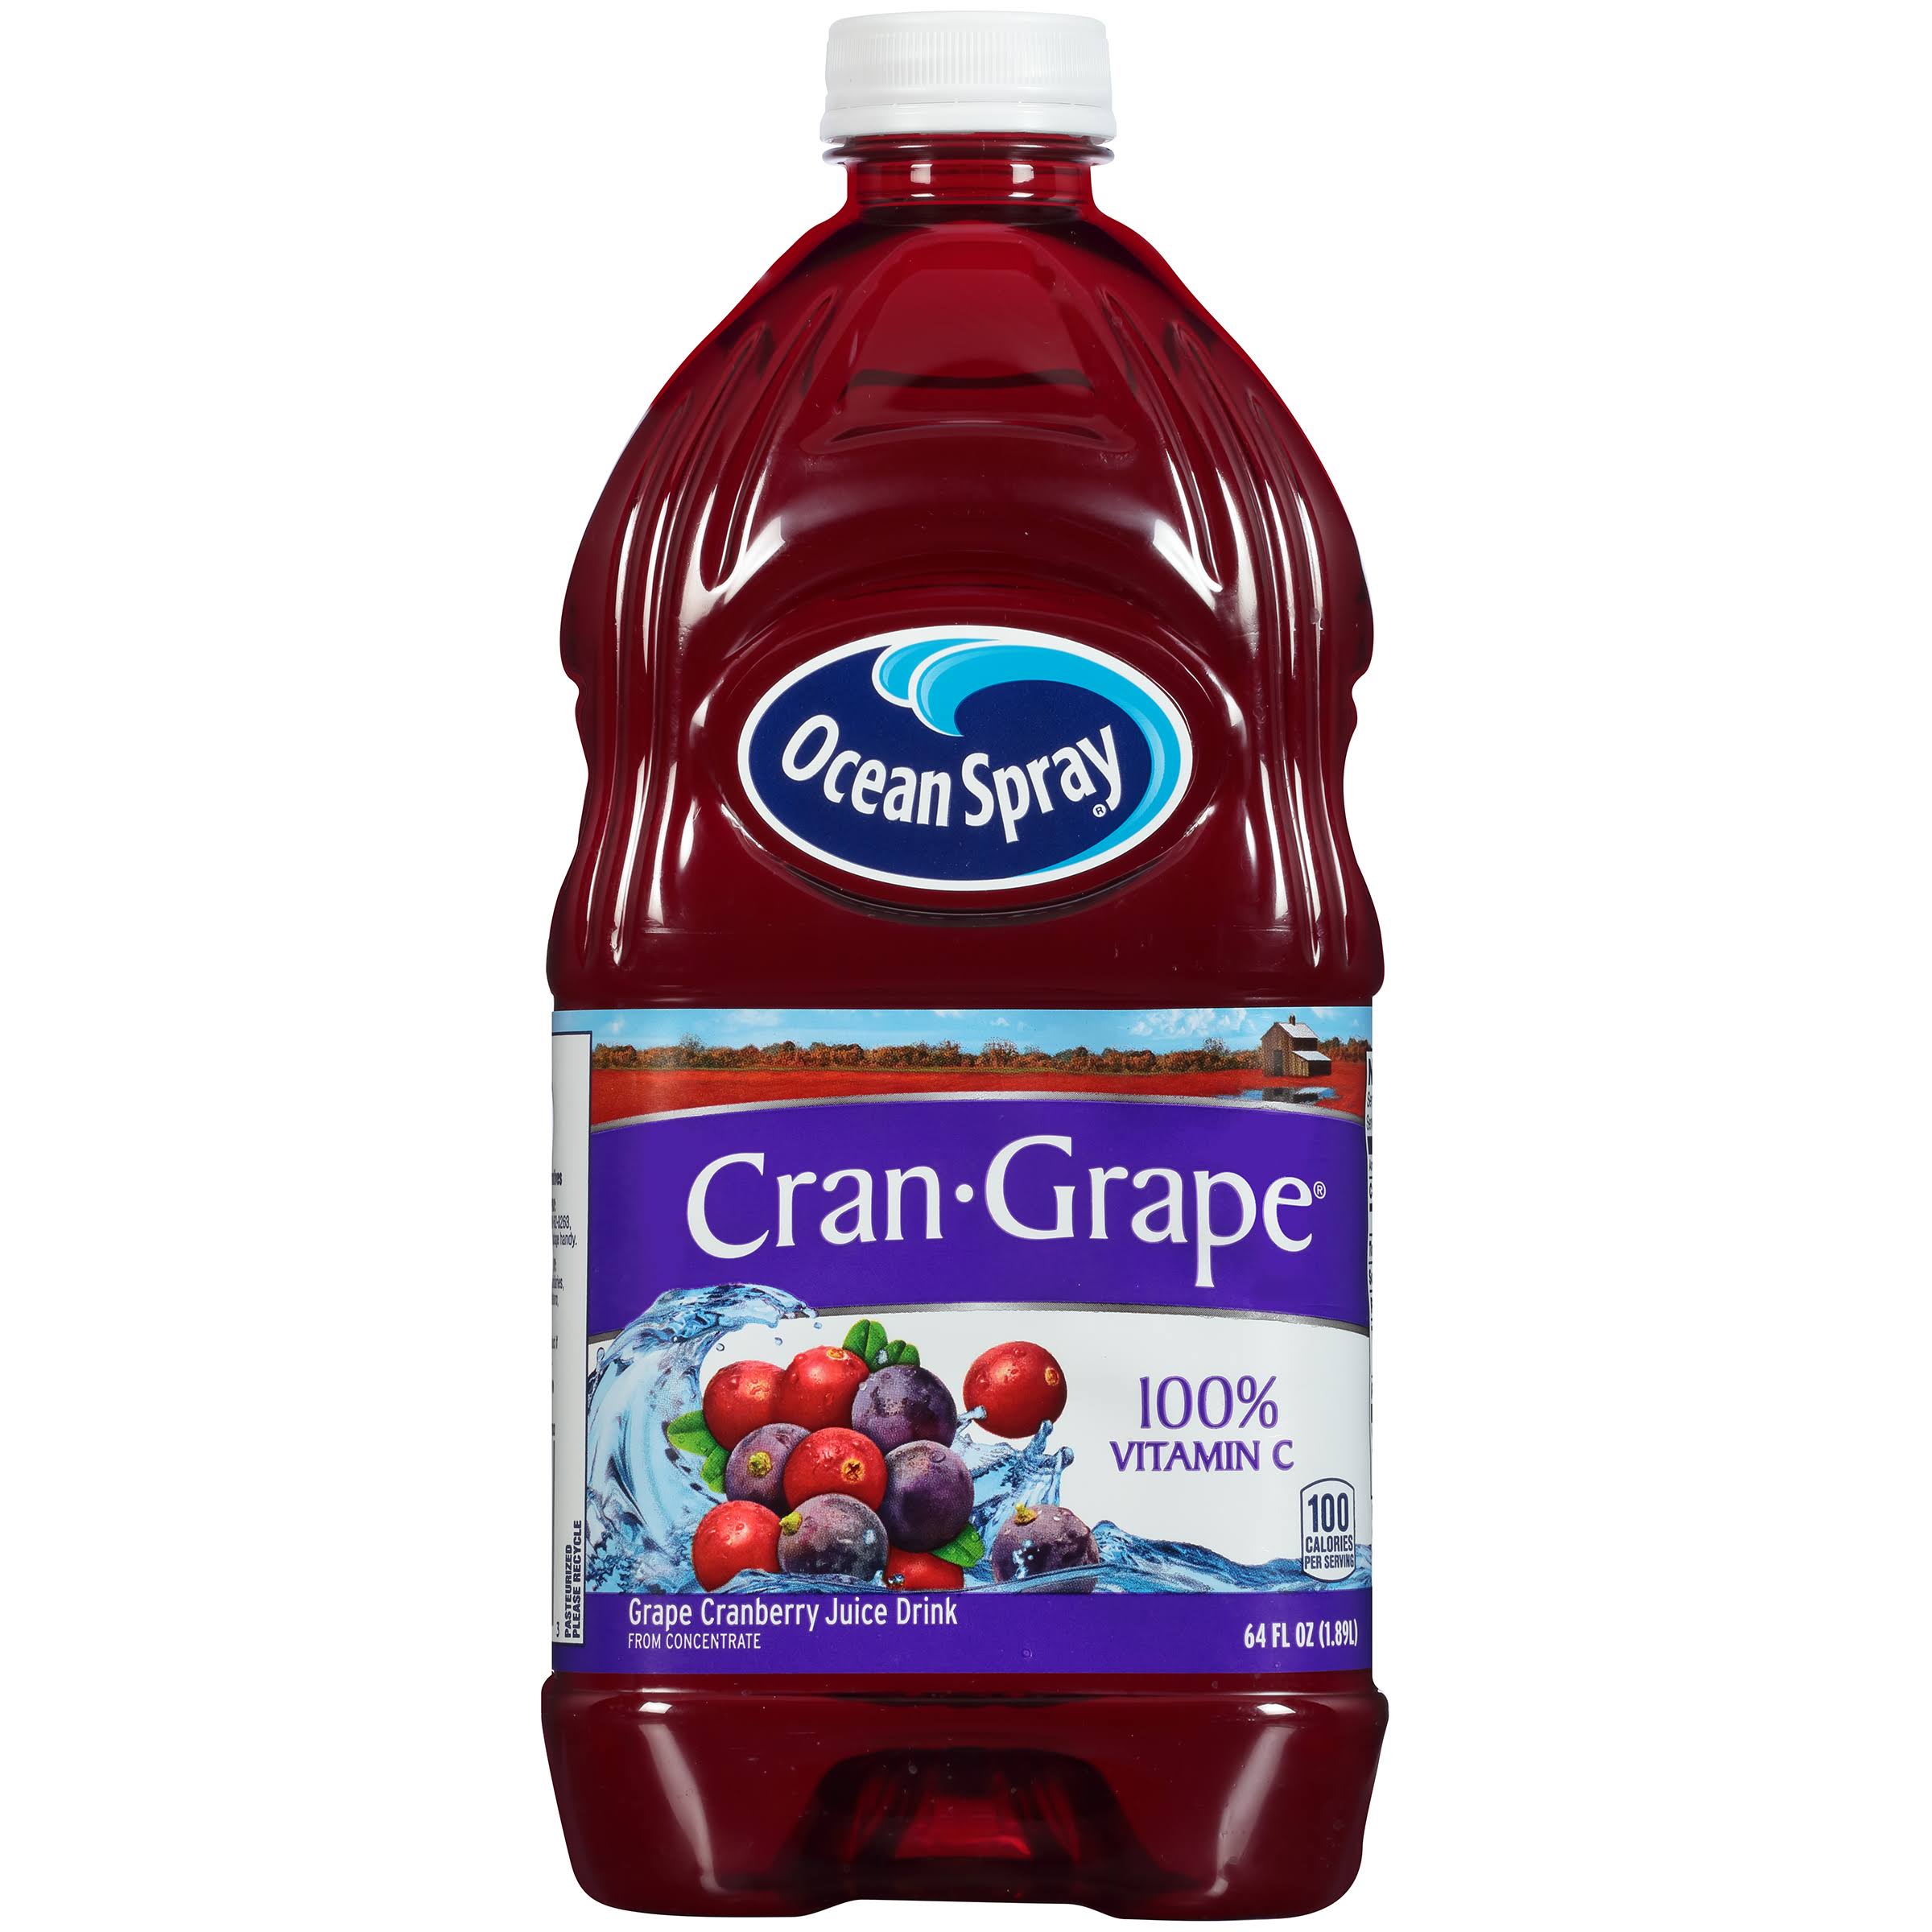 Ocean Spray Cran-Grape Grape Cranberry Juice Drink - 64 oz